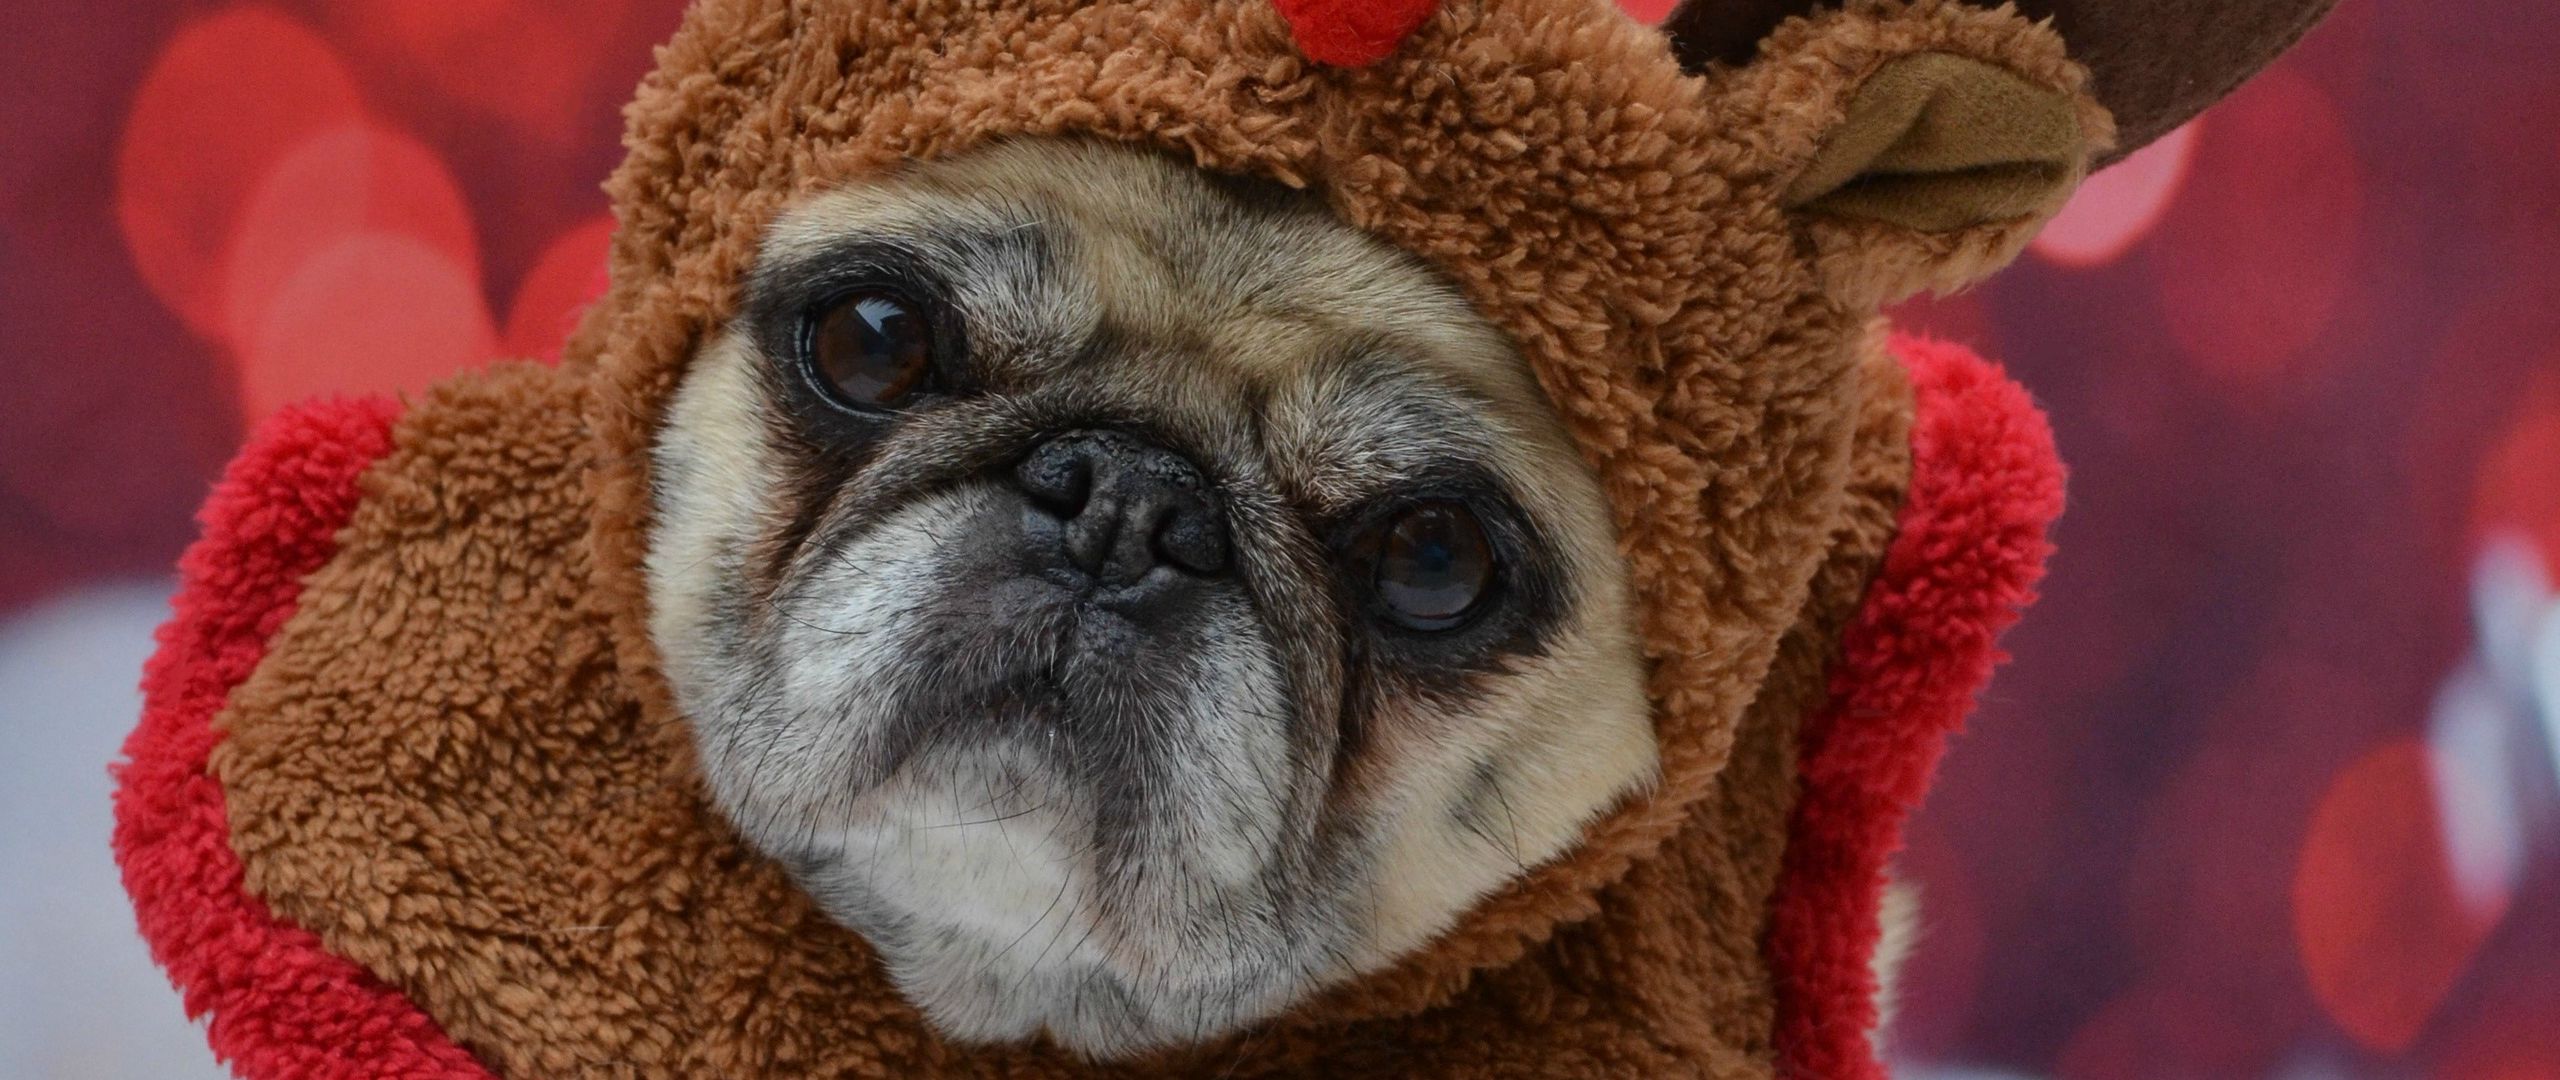 Wallpaper Pug dog in costume